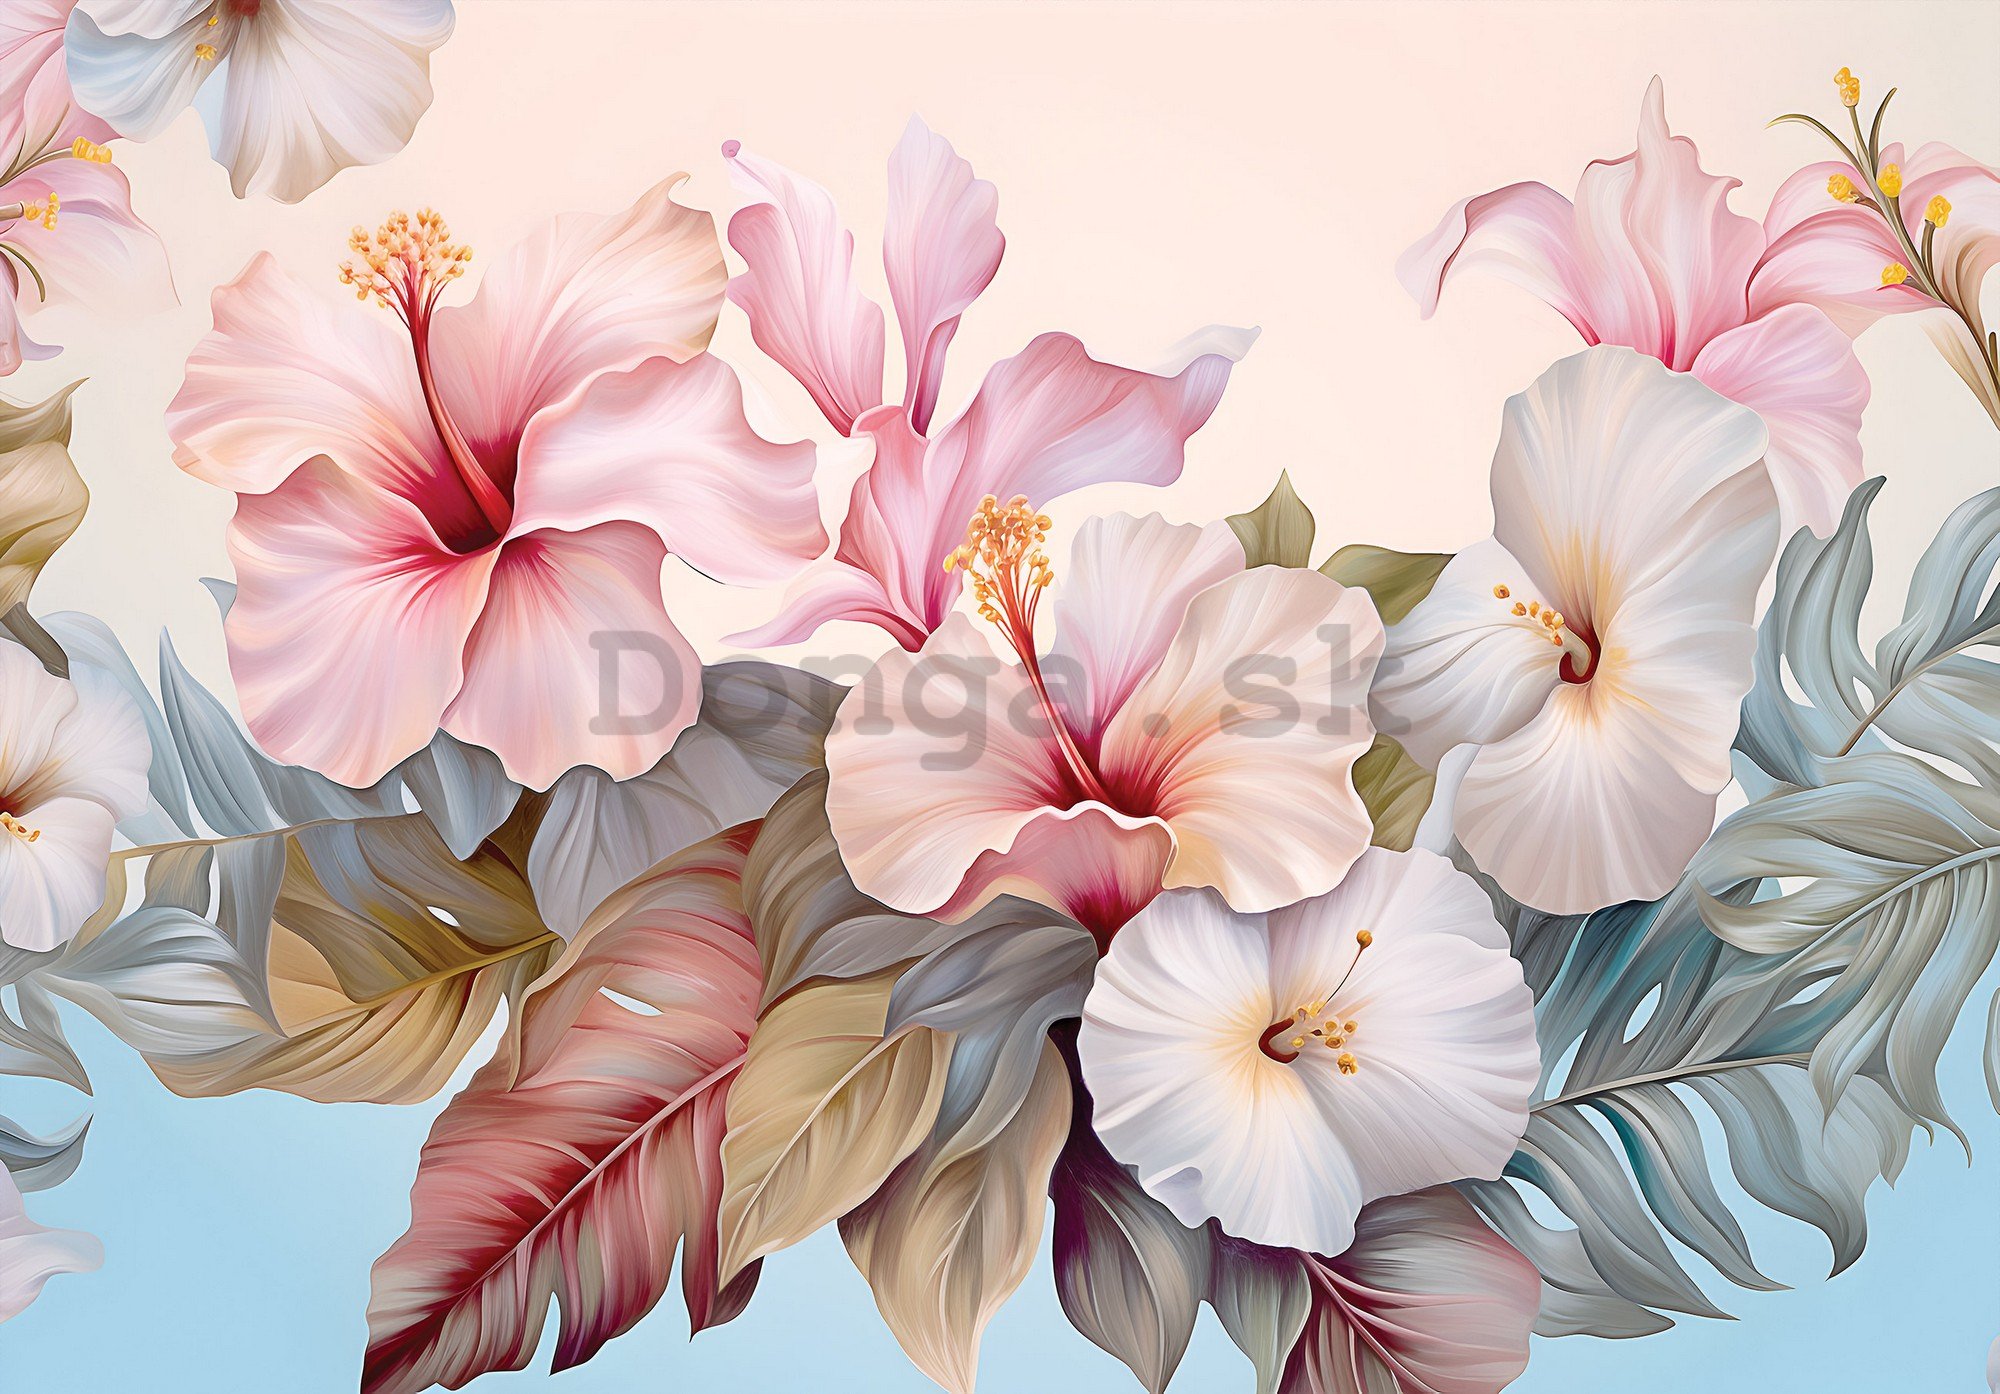 Fototapety vliesové: Nature flowers hibiscus painting - 368x254 cm